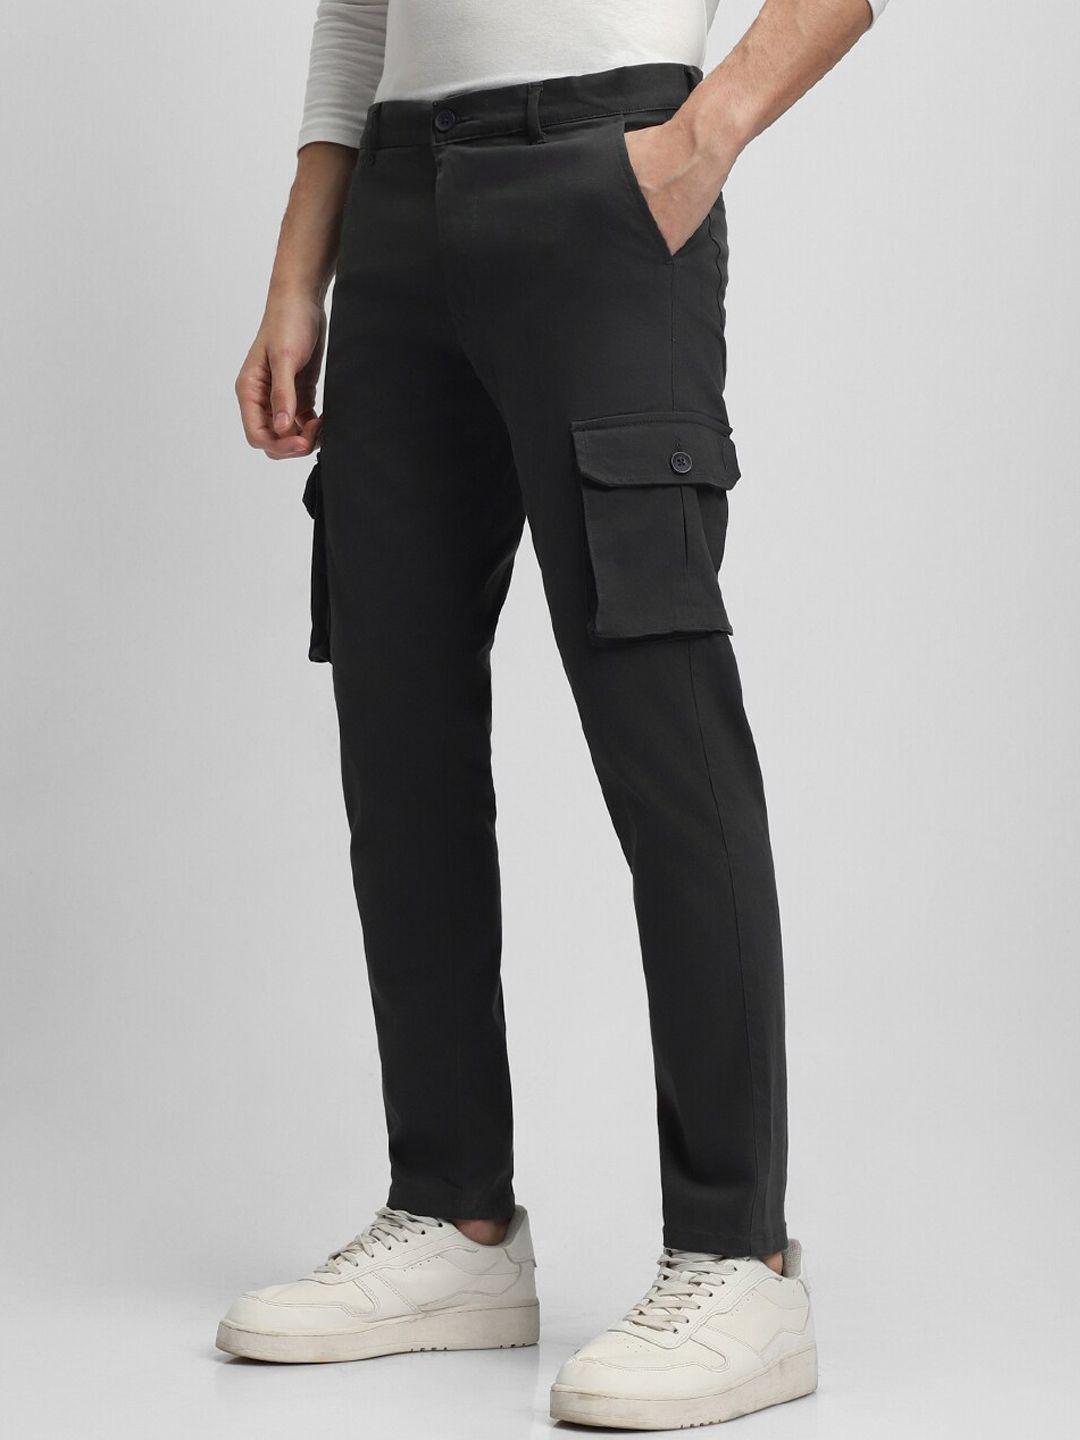 dennis-lingo-men-urban-slim-mid-rise-pure-cotton-cargos-trousers